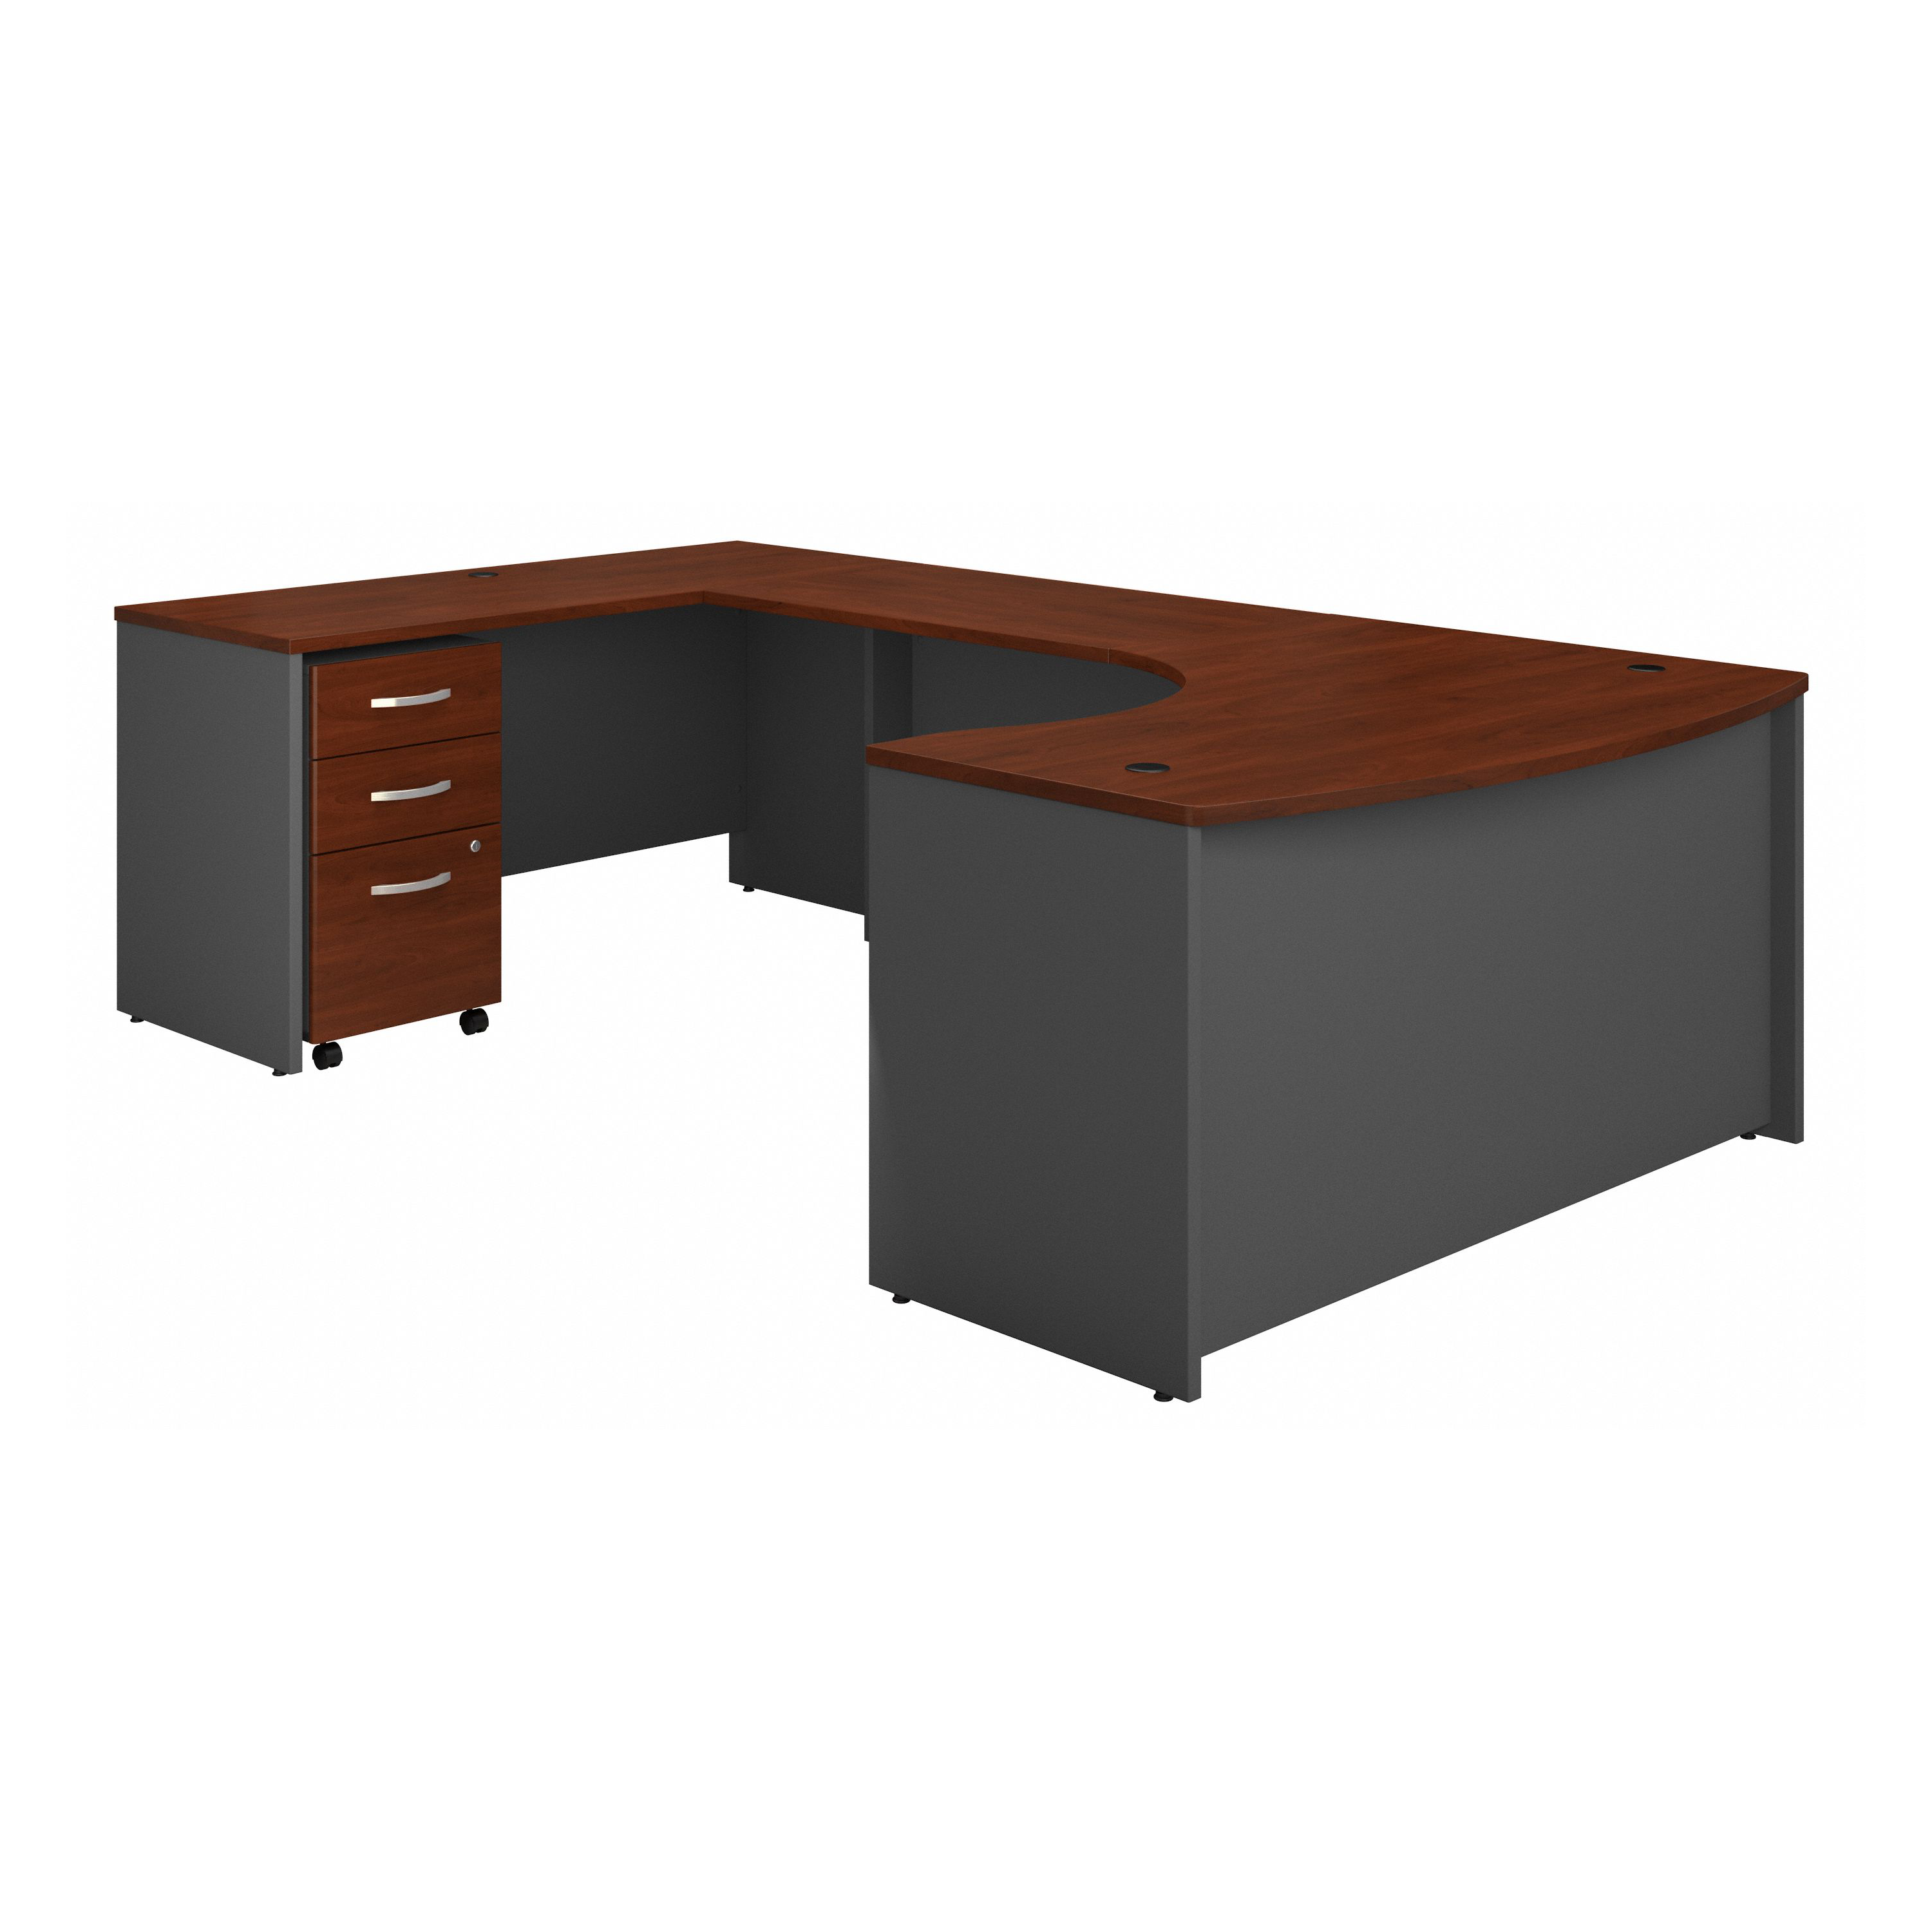 Shop Bush Business Furniture Series C 60W Left Handed Bow Front U Shaped Desk with Mobile File Cabinet 02 SRC090HCSU #color_hansen cherry/graphite gray